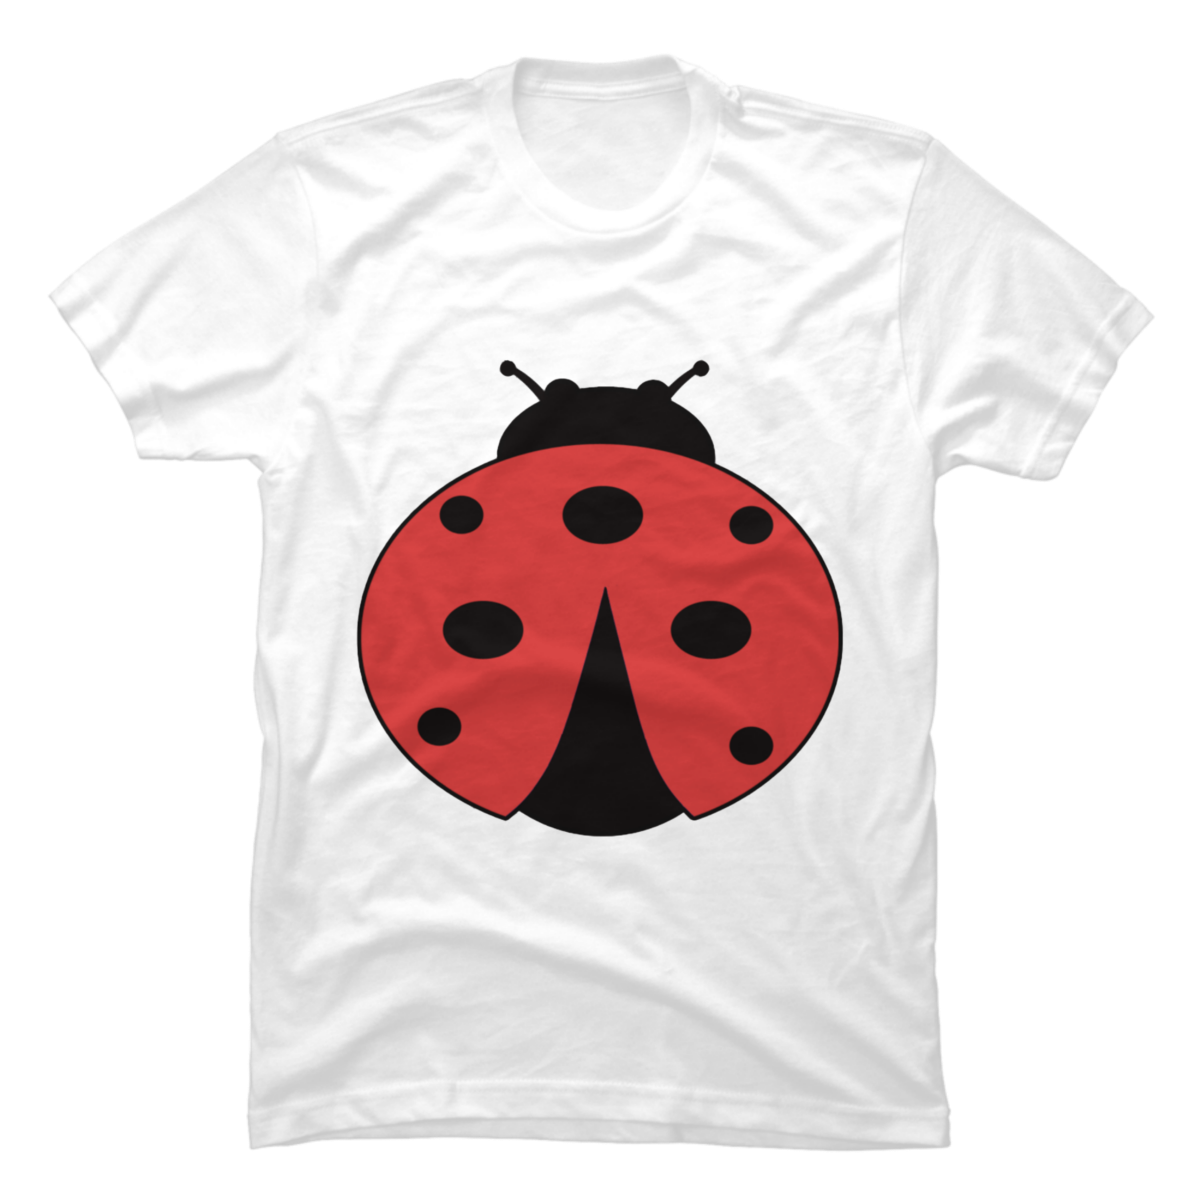 ladybug t shirt designs